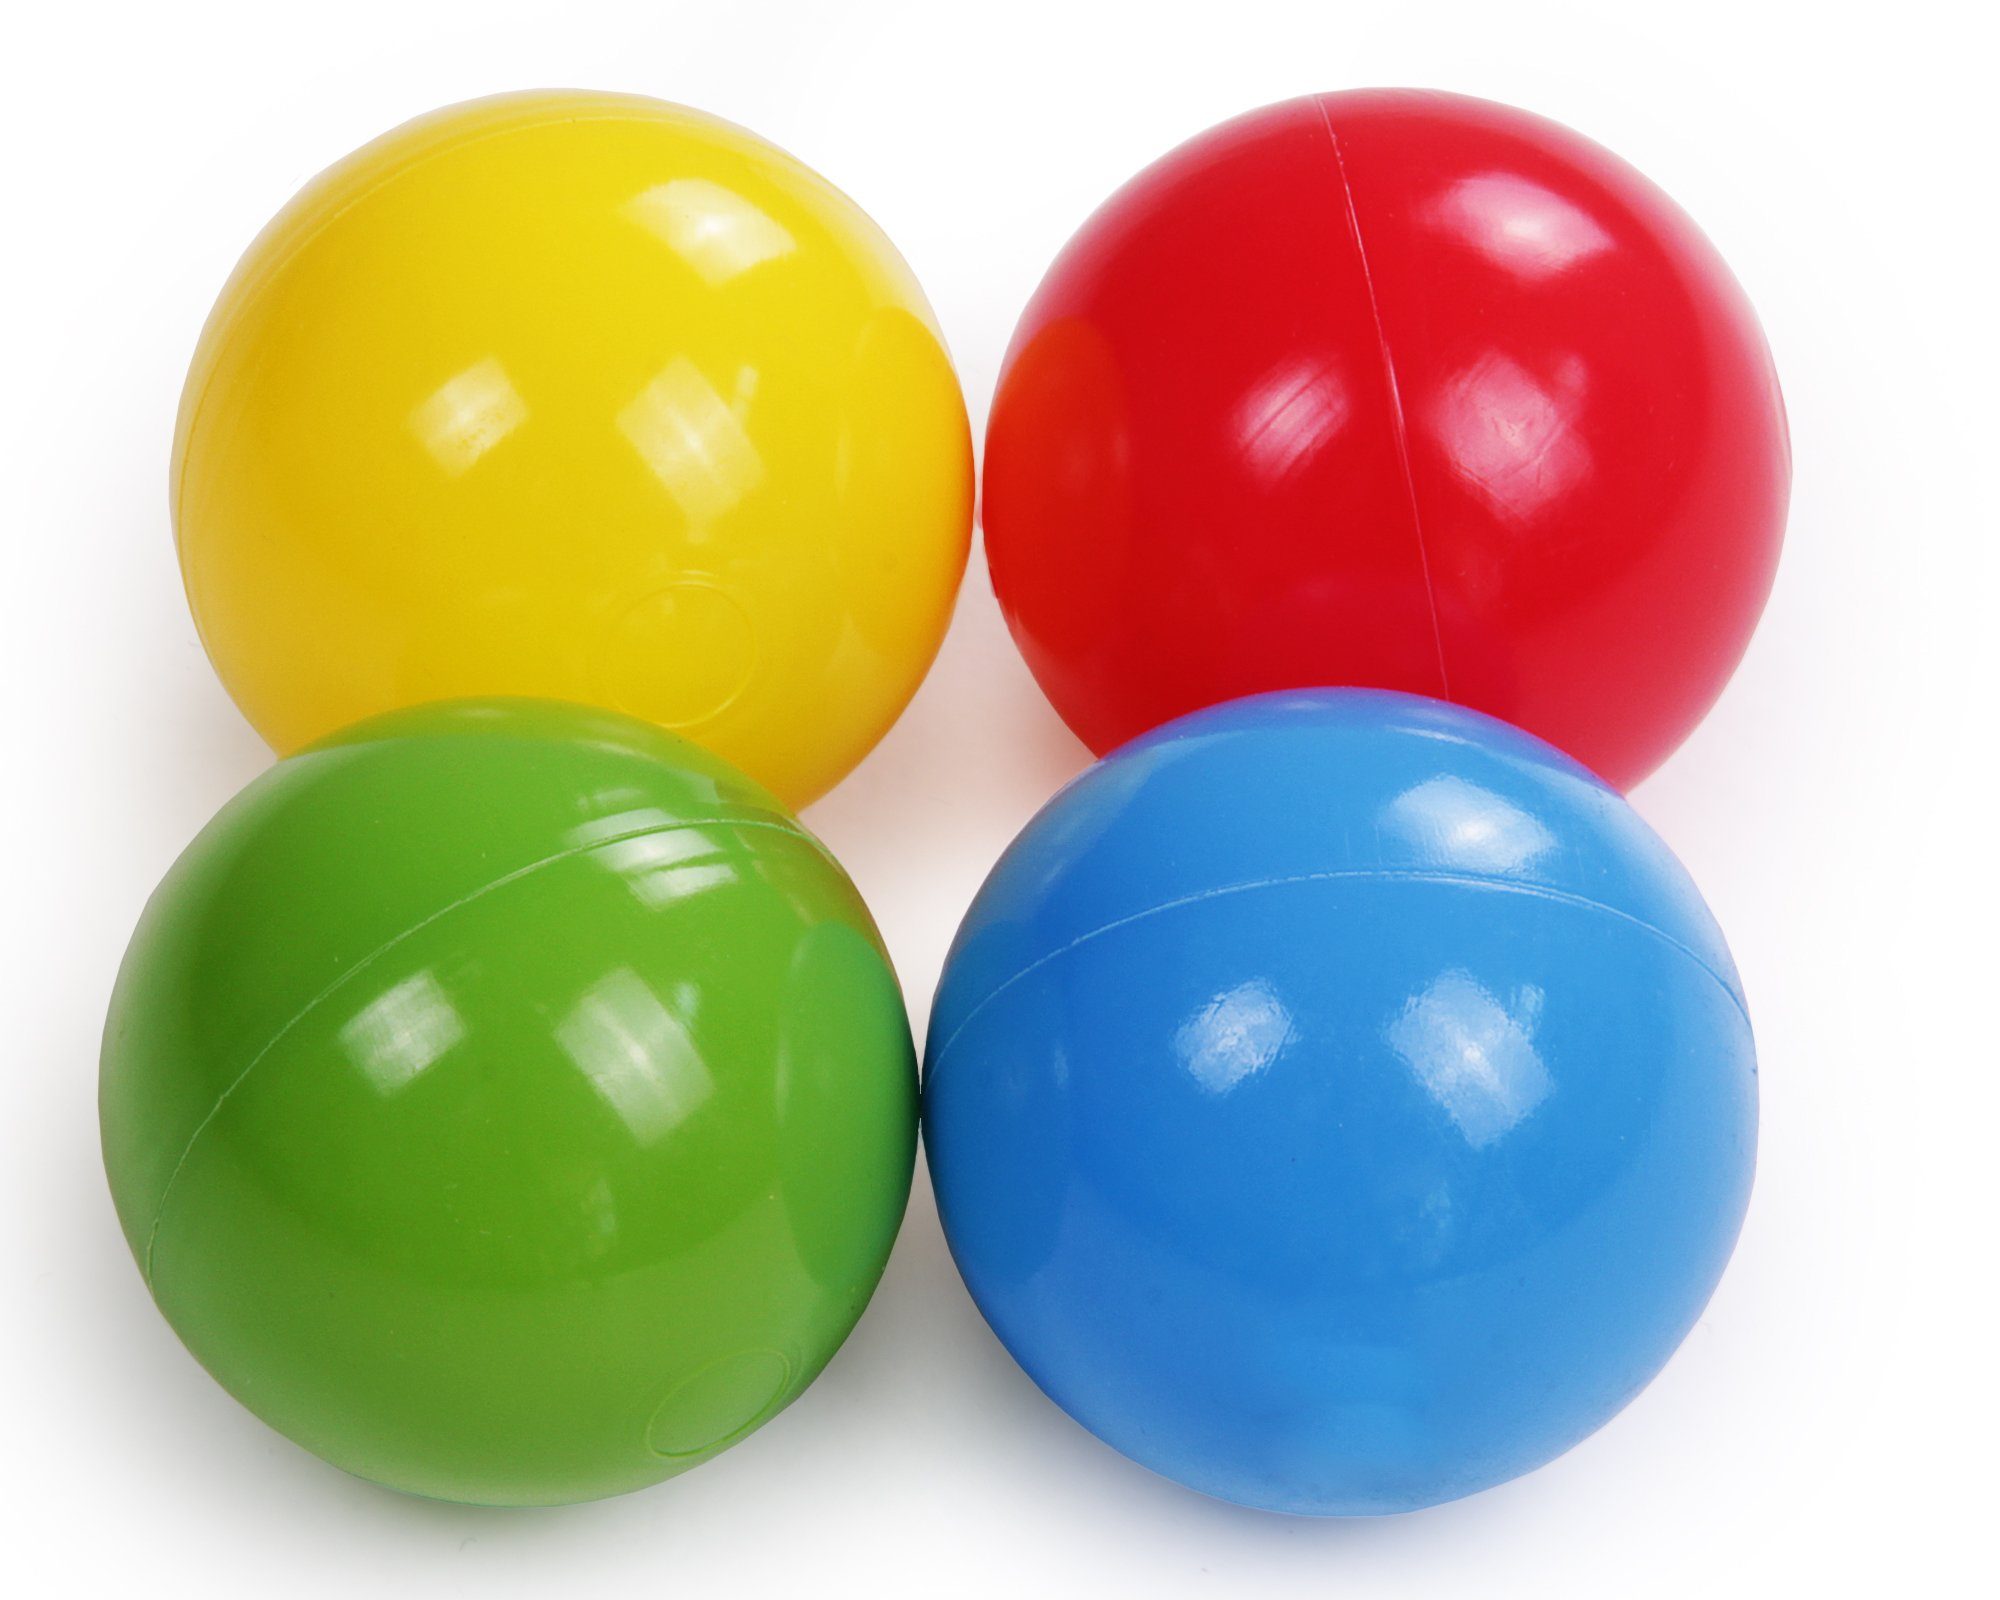 Ballnetz Bällebad-Bälle Set für 100 Bälleparadies, Kinder ONDIS24 Bälle für mit Bällebad Badebälle